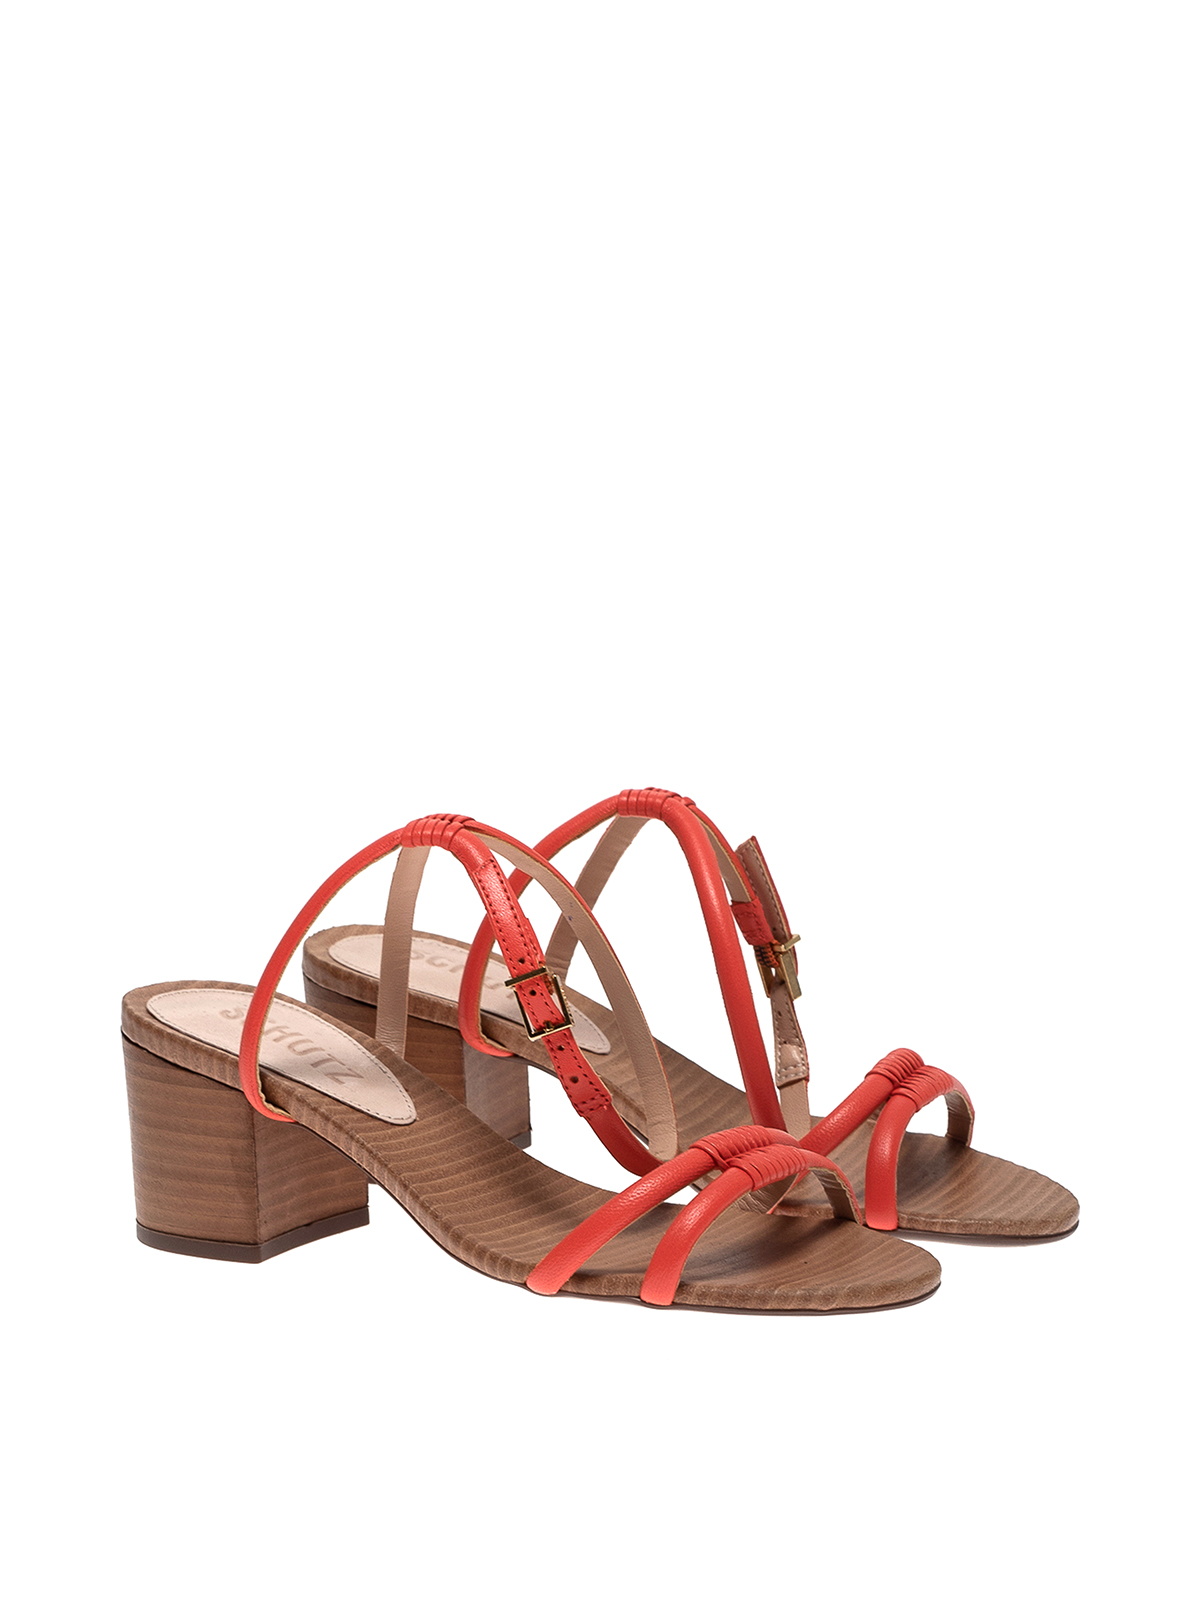 Sandals Schutz - Nappa sandals - S2000104330005 | Shop online at iKRIX